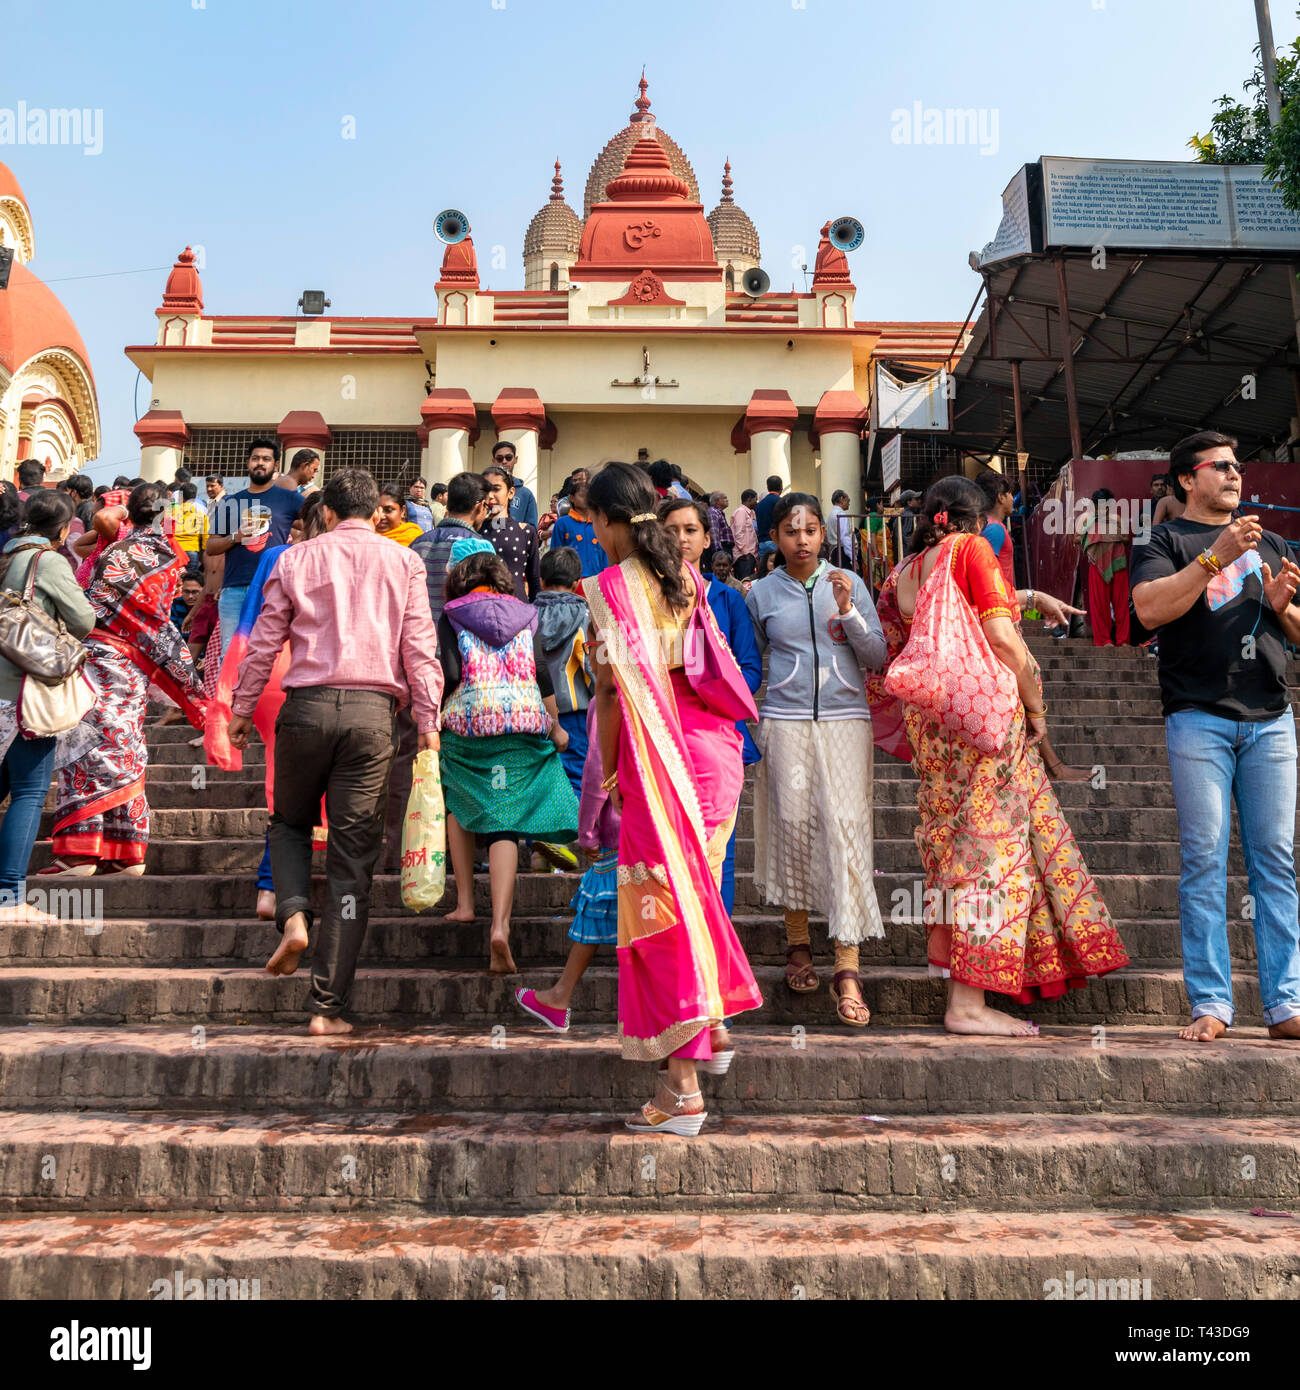 Square view of people on the ghat at Dakshineswar Kali temple in Kolkata aka Calcutta, India. Stock Photo